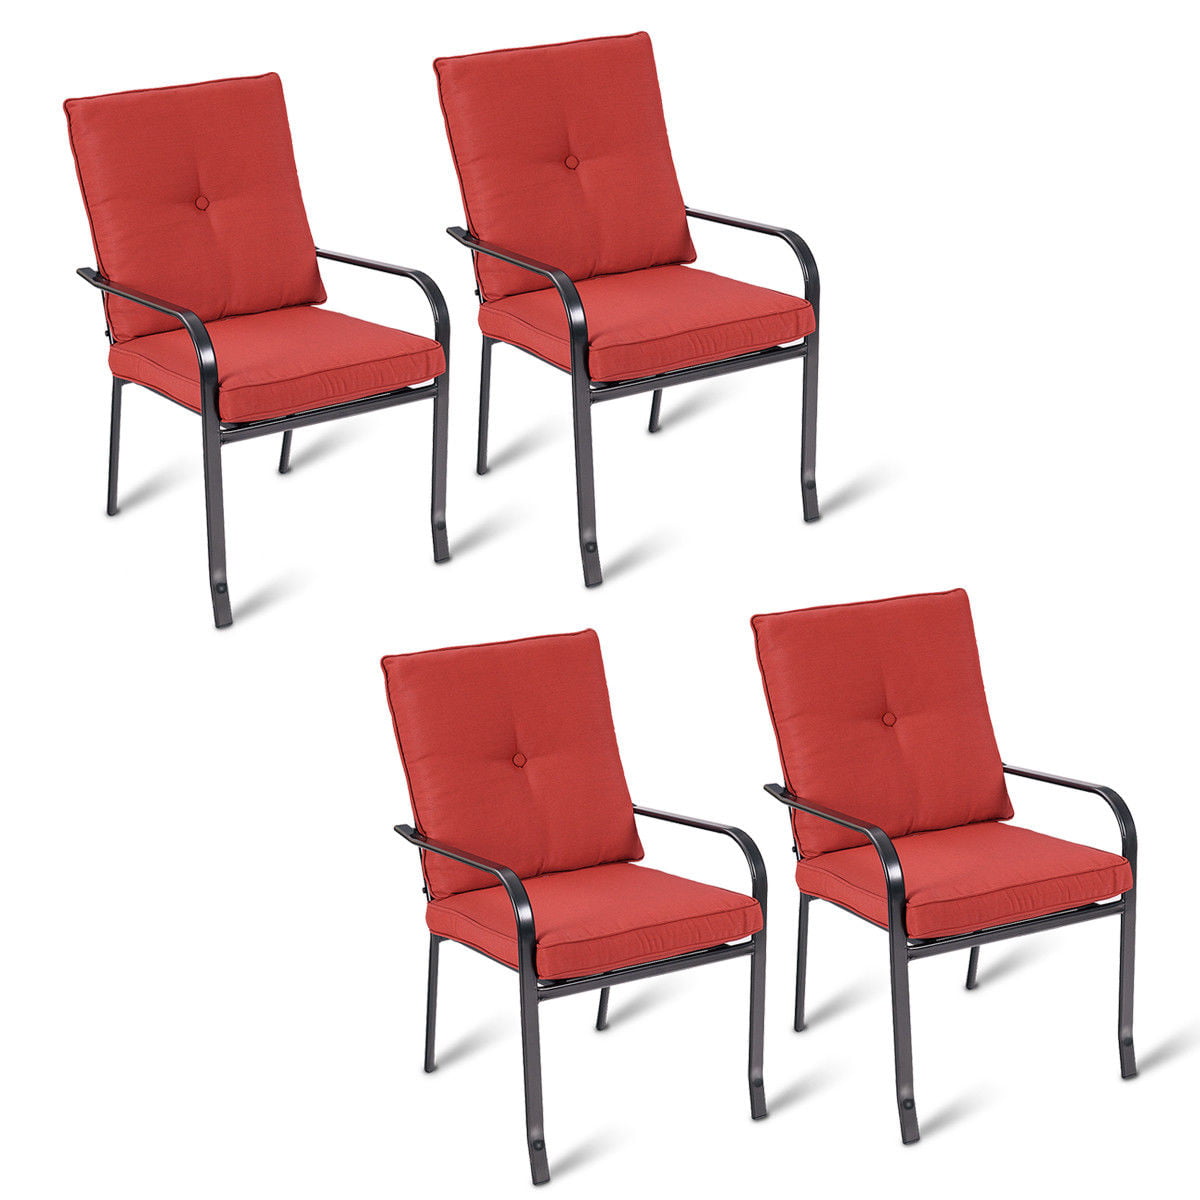 Costway Set of 4 Patio Garden Chairs Steel Frame Outdoor Furniture